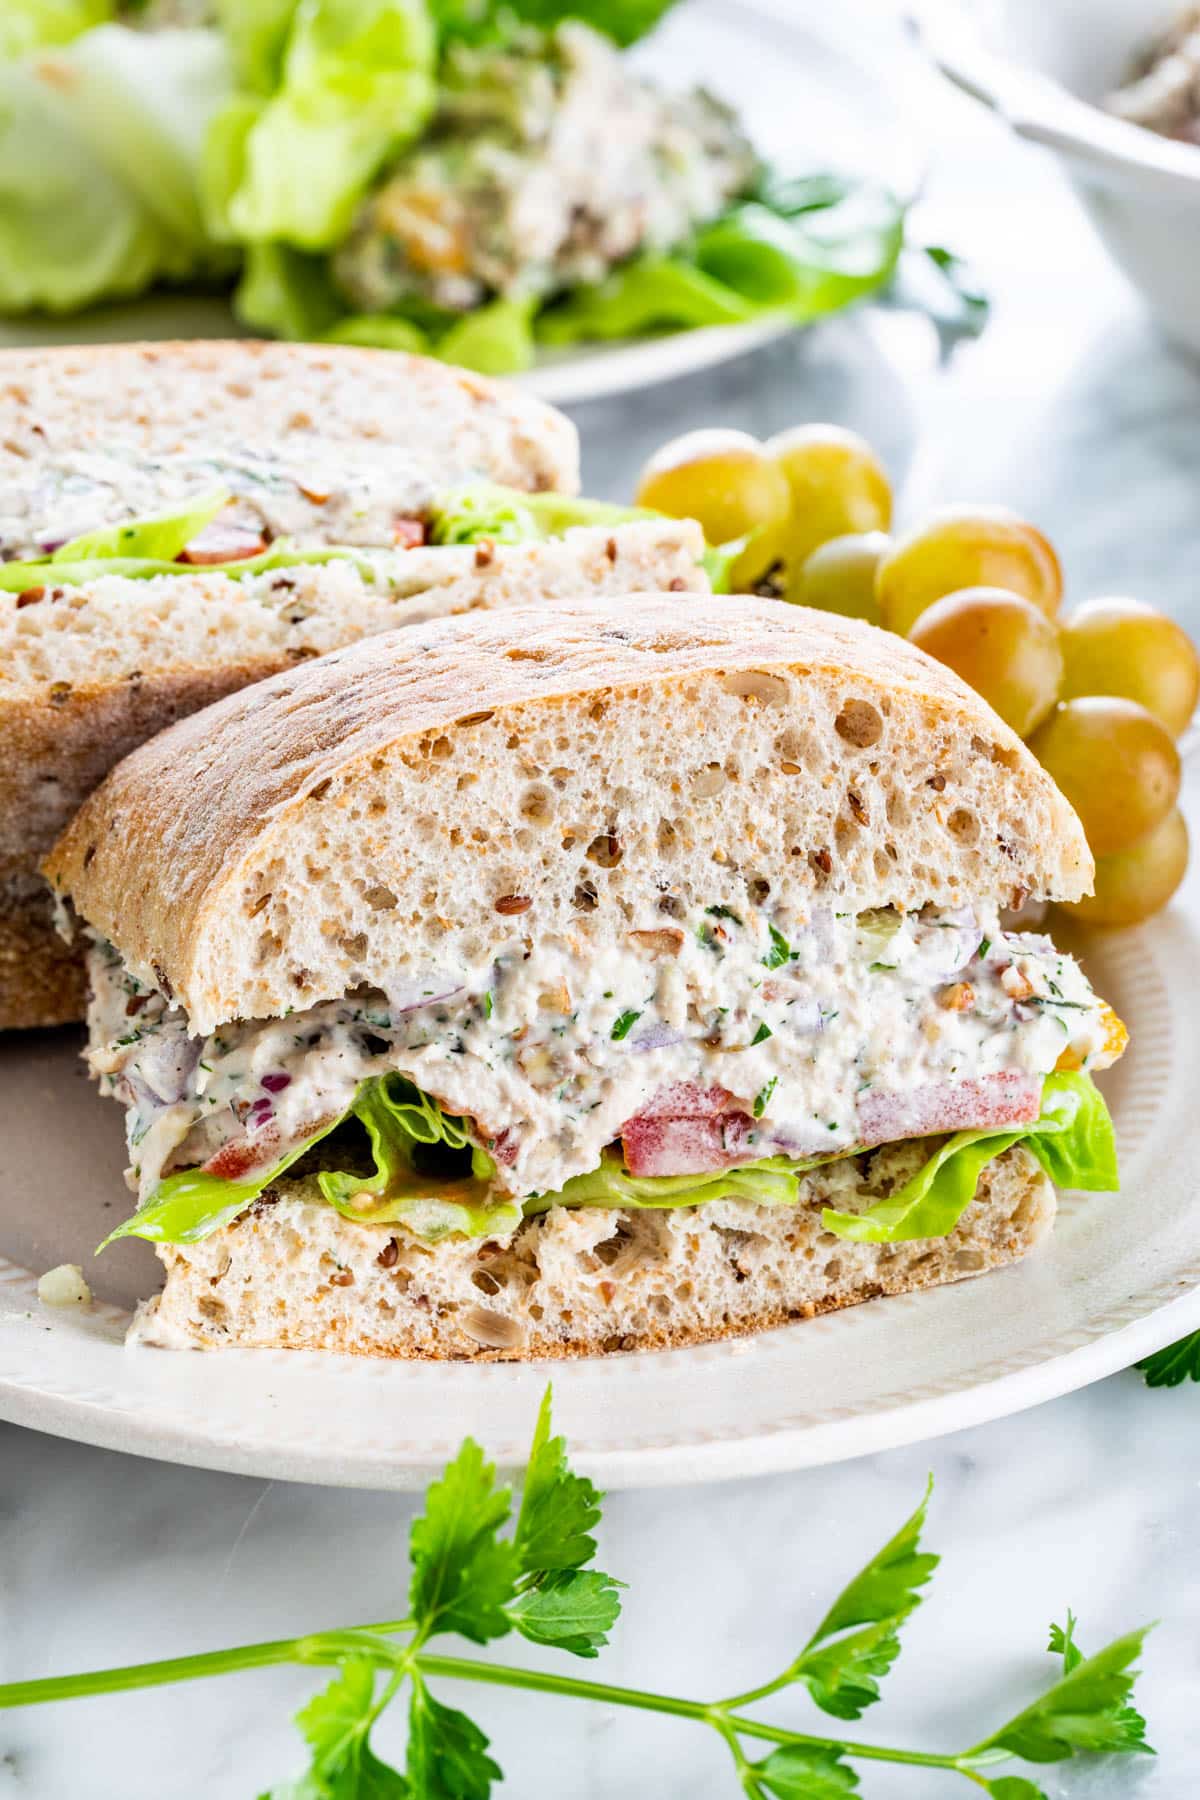 How to make tuna sandwich